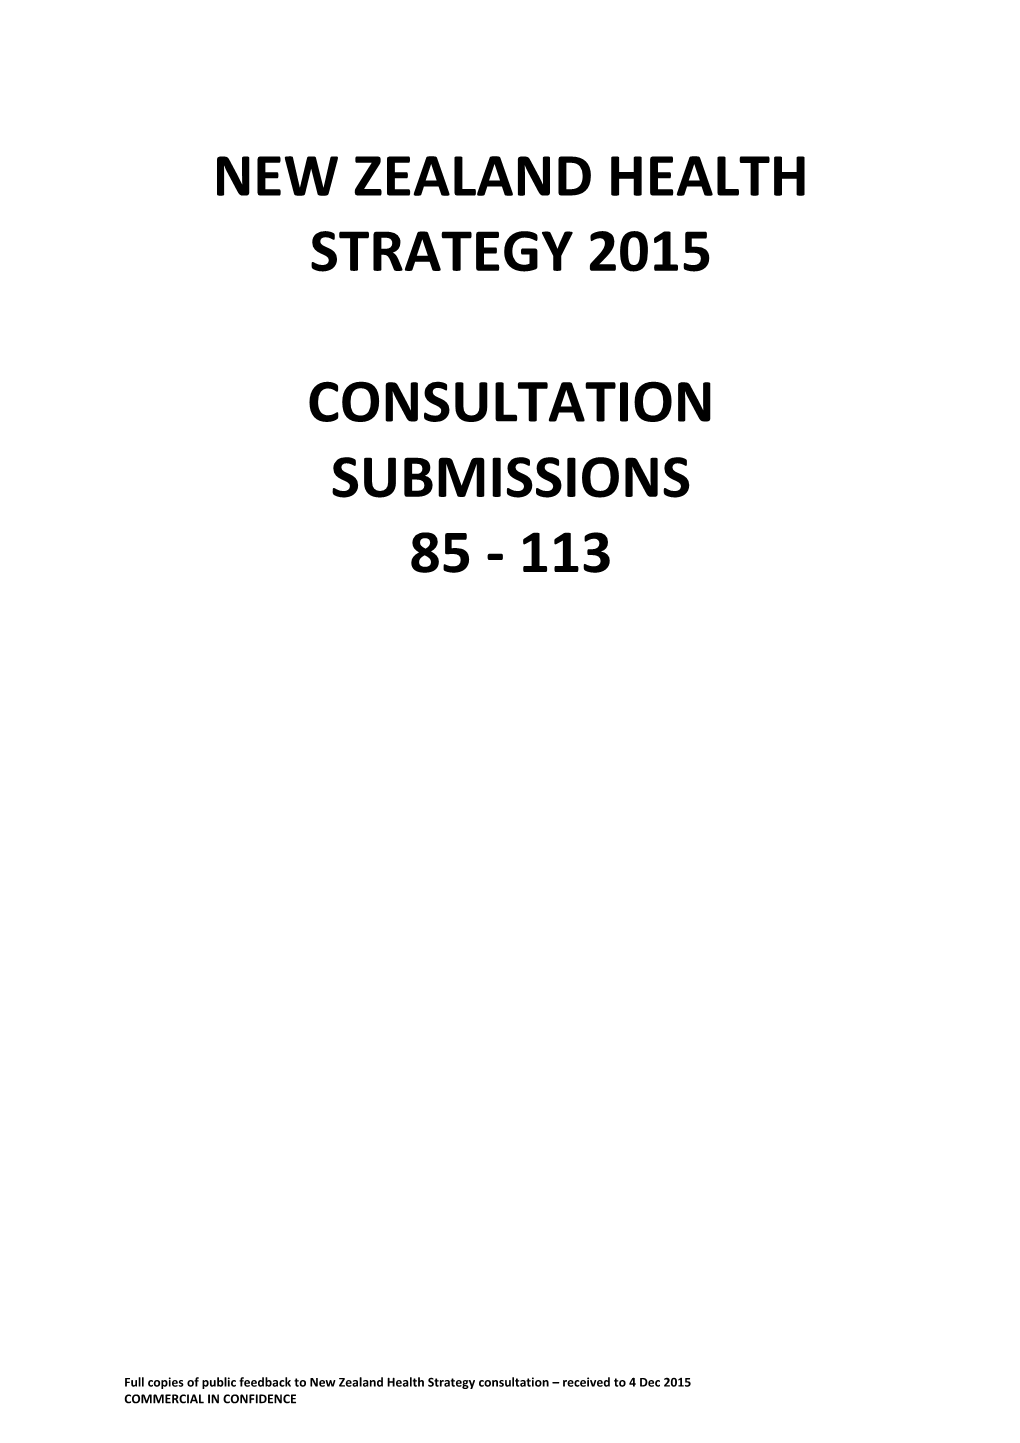 New Zealand Health Strategy 2015